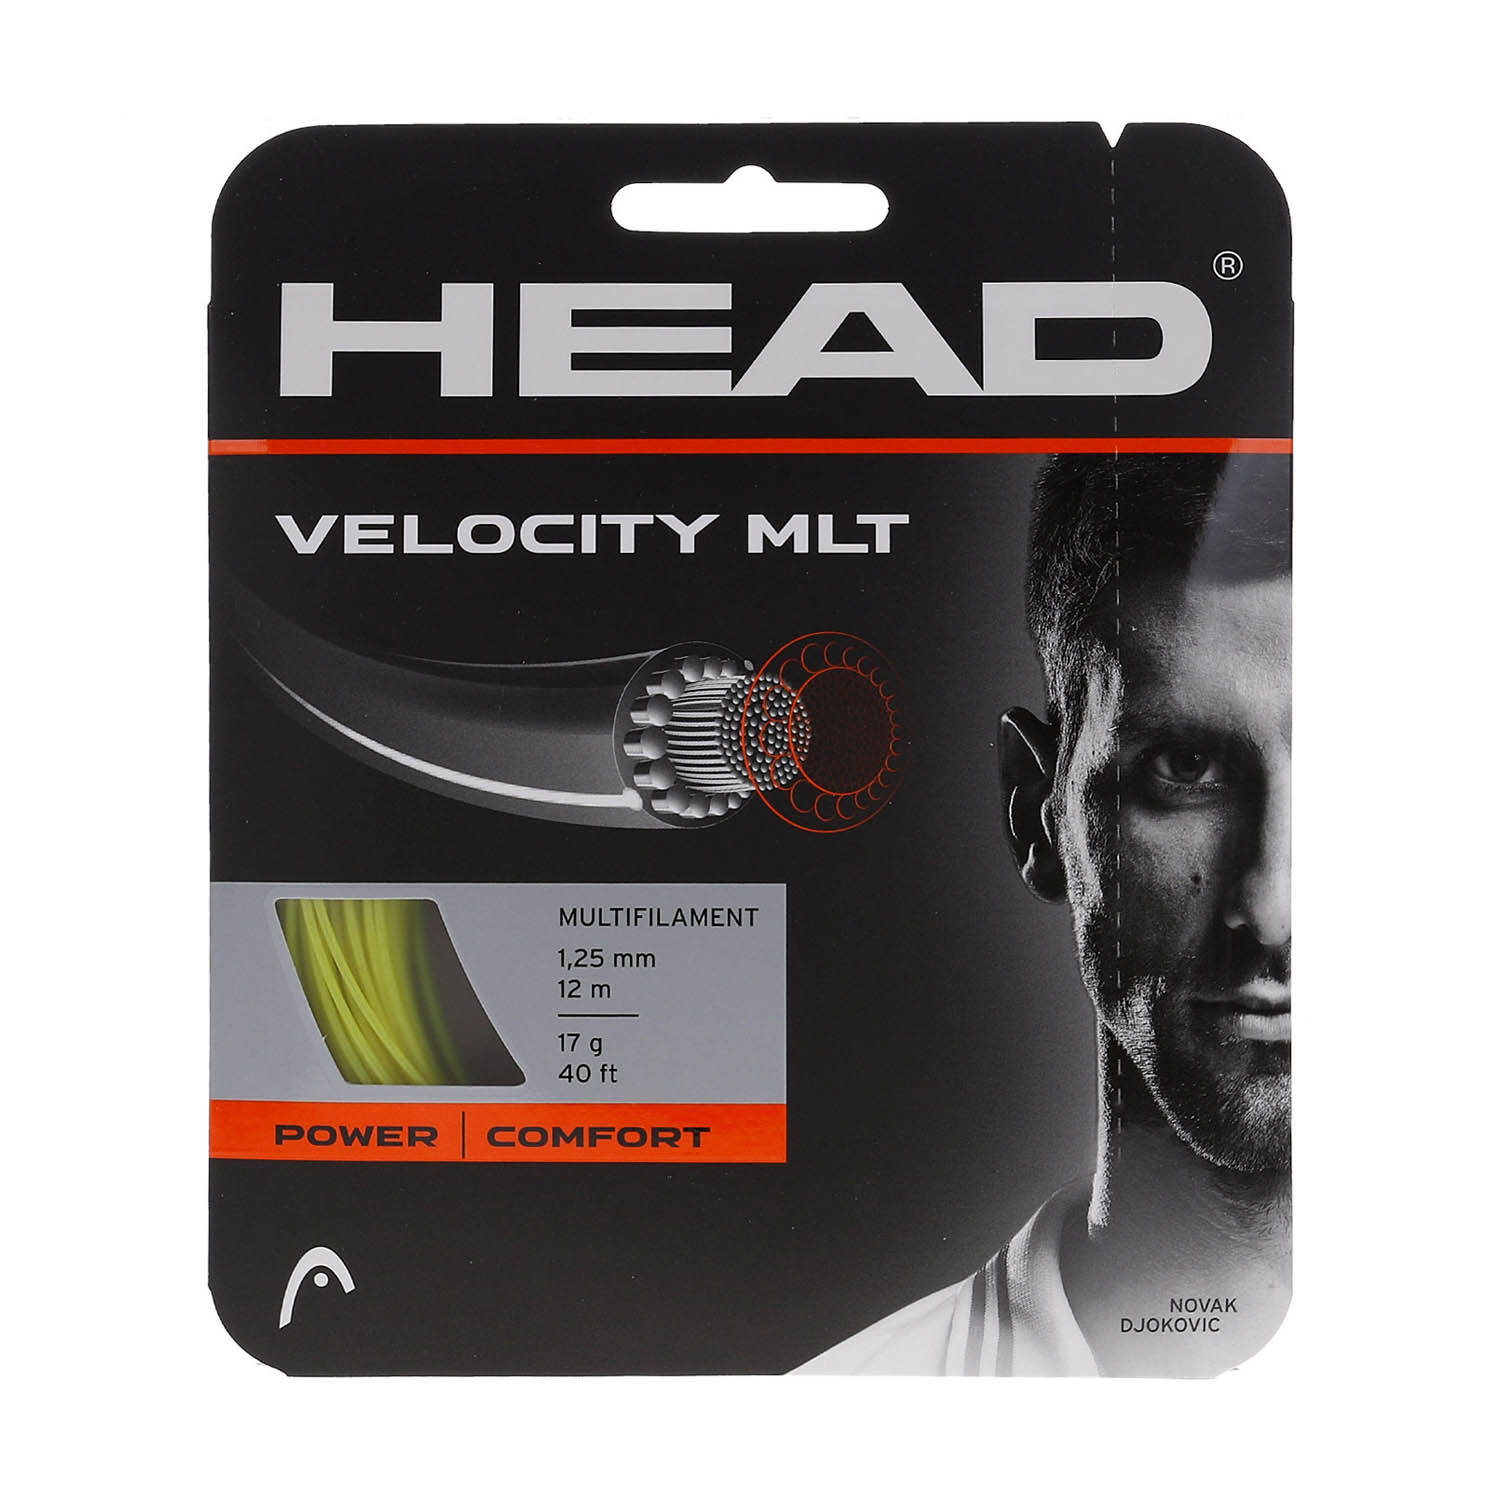 Head MultiPower Velocity 1.25 Set 12 m - Yellow